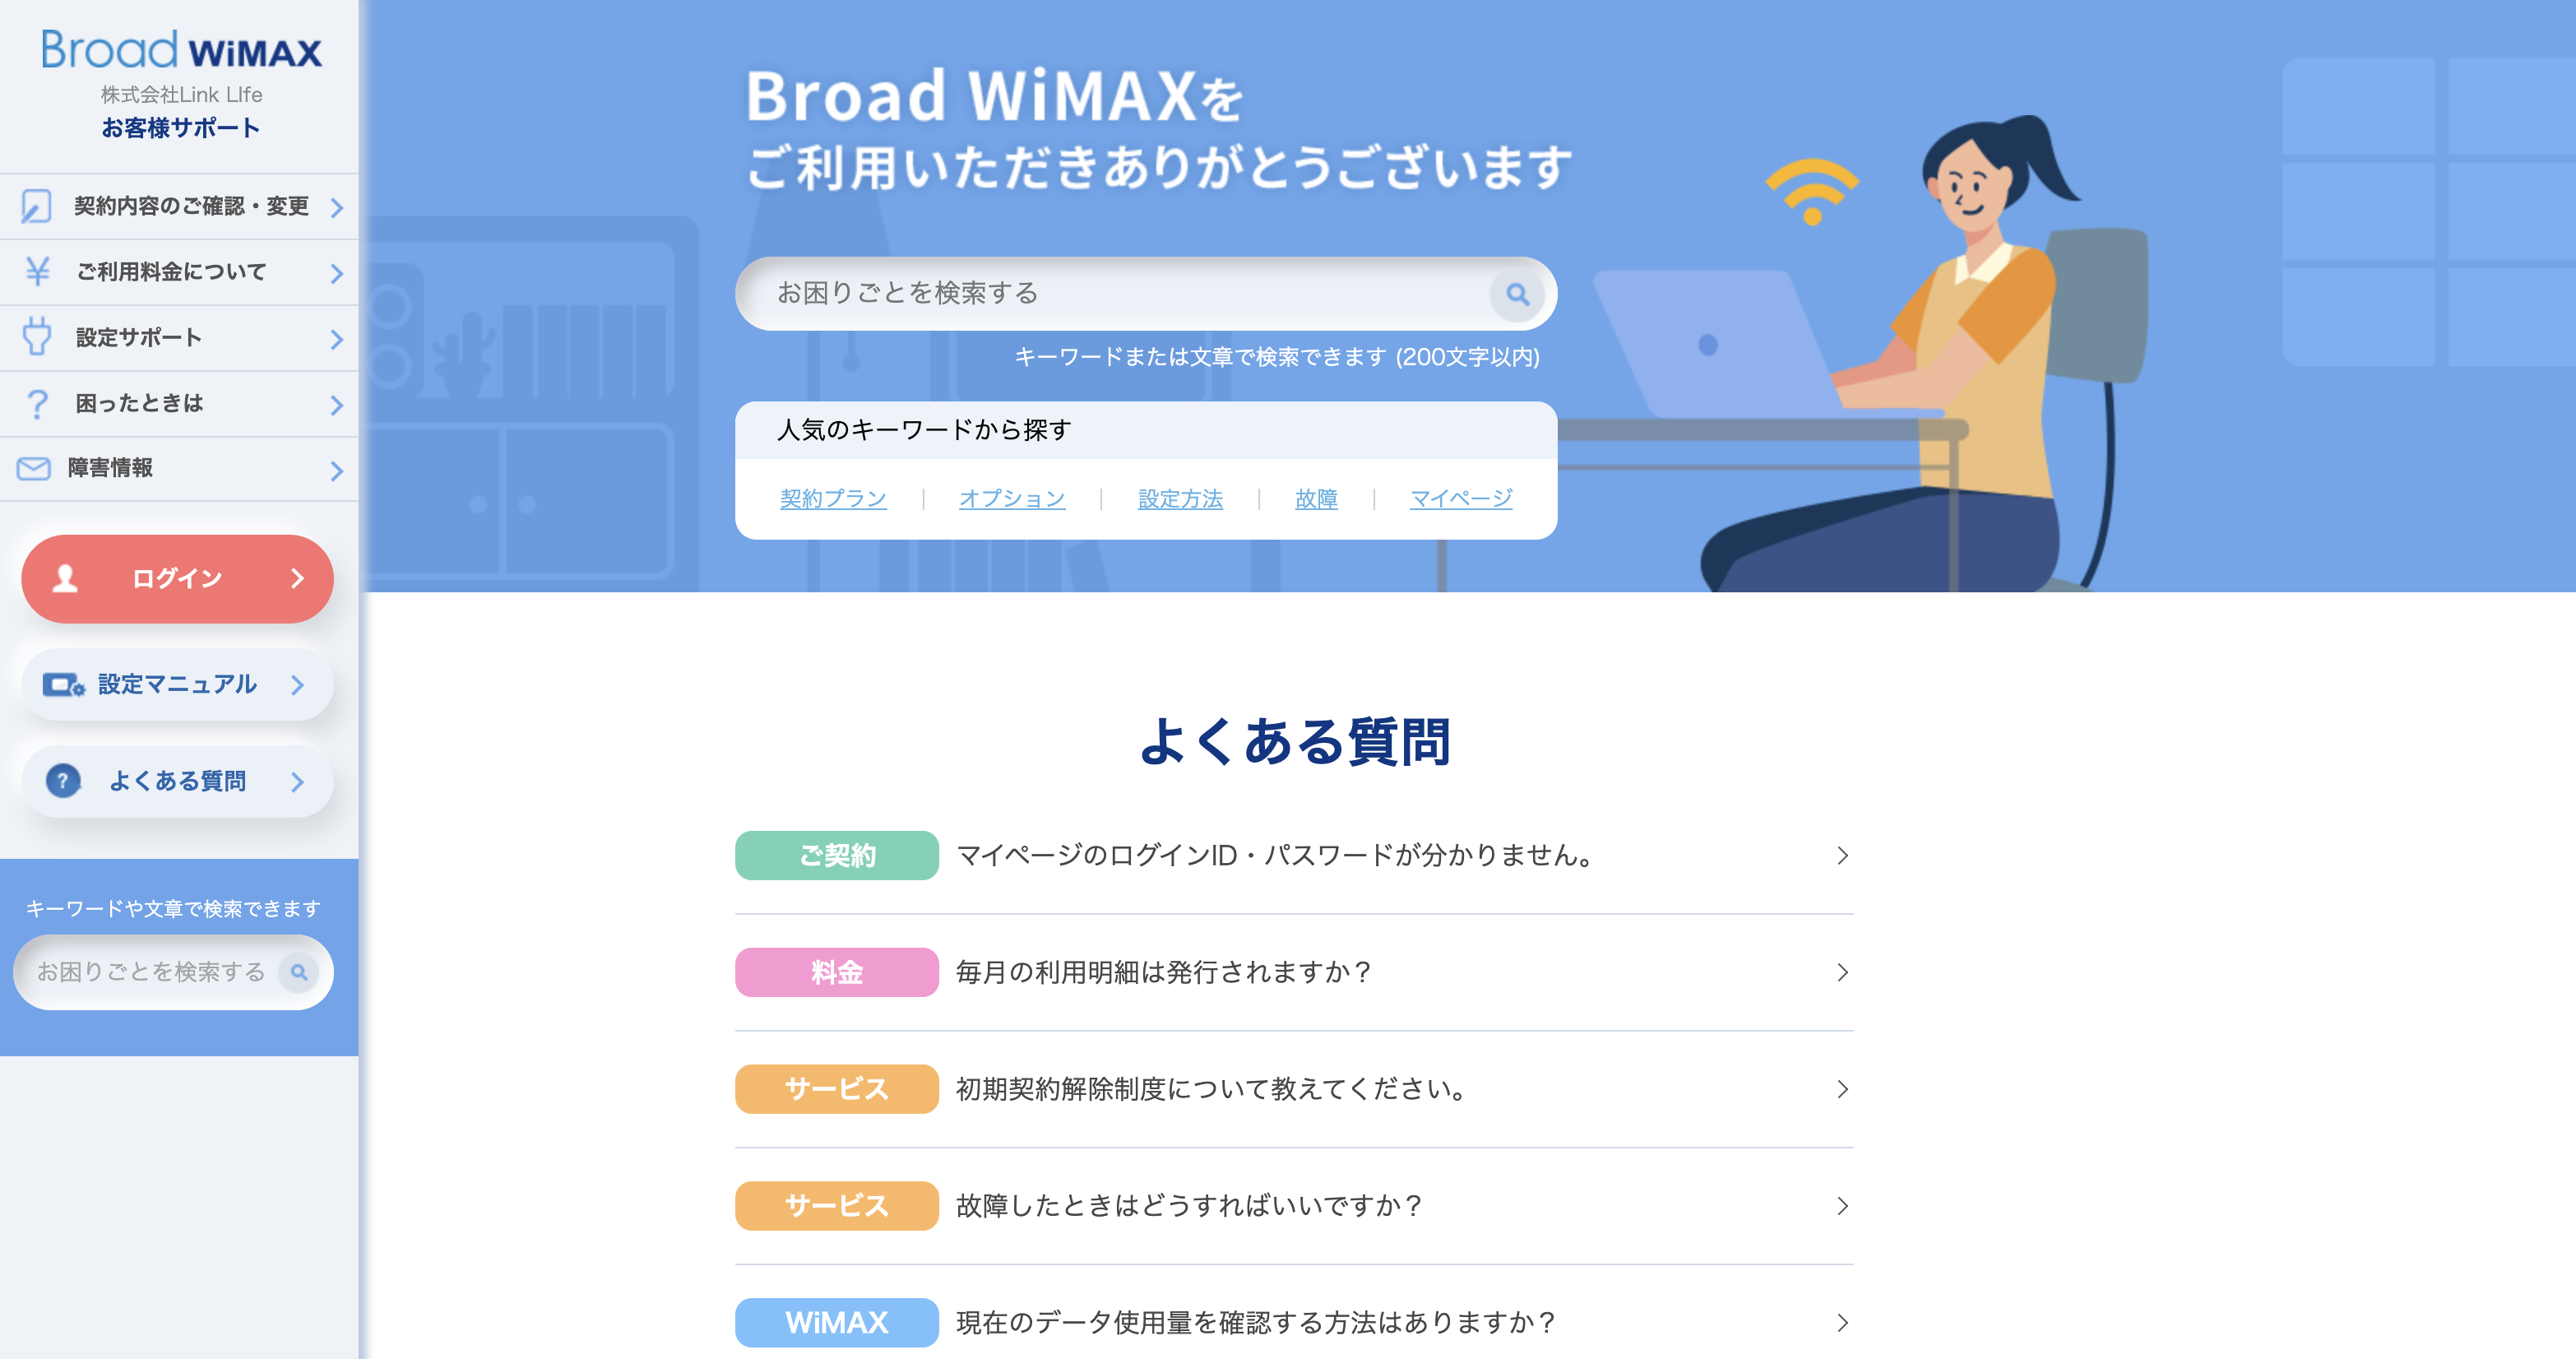 Broad WiMAX(ブロードワイマックス)のよくある質問ページ